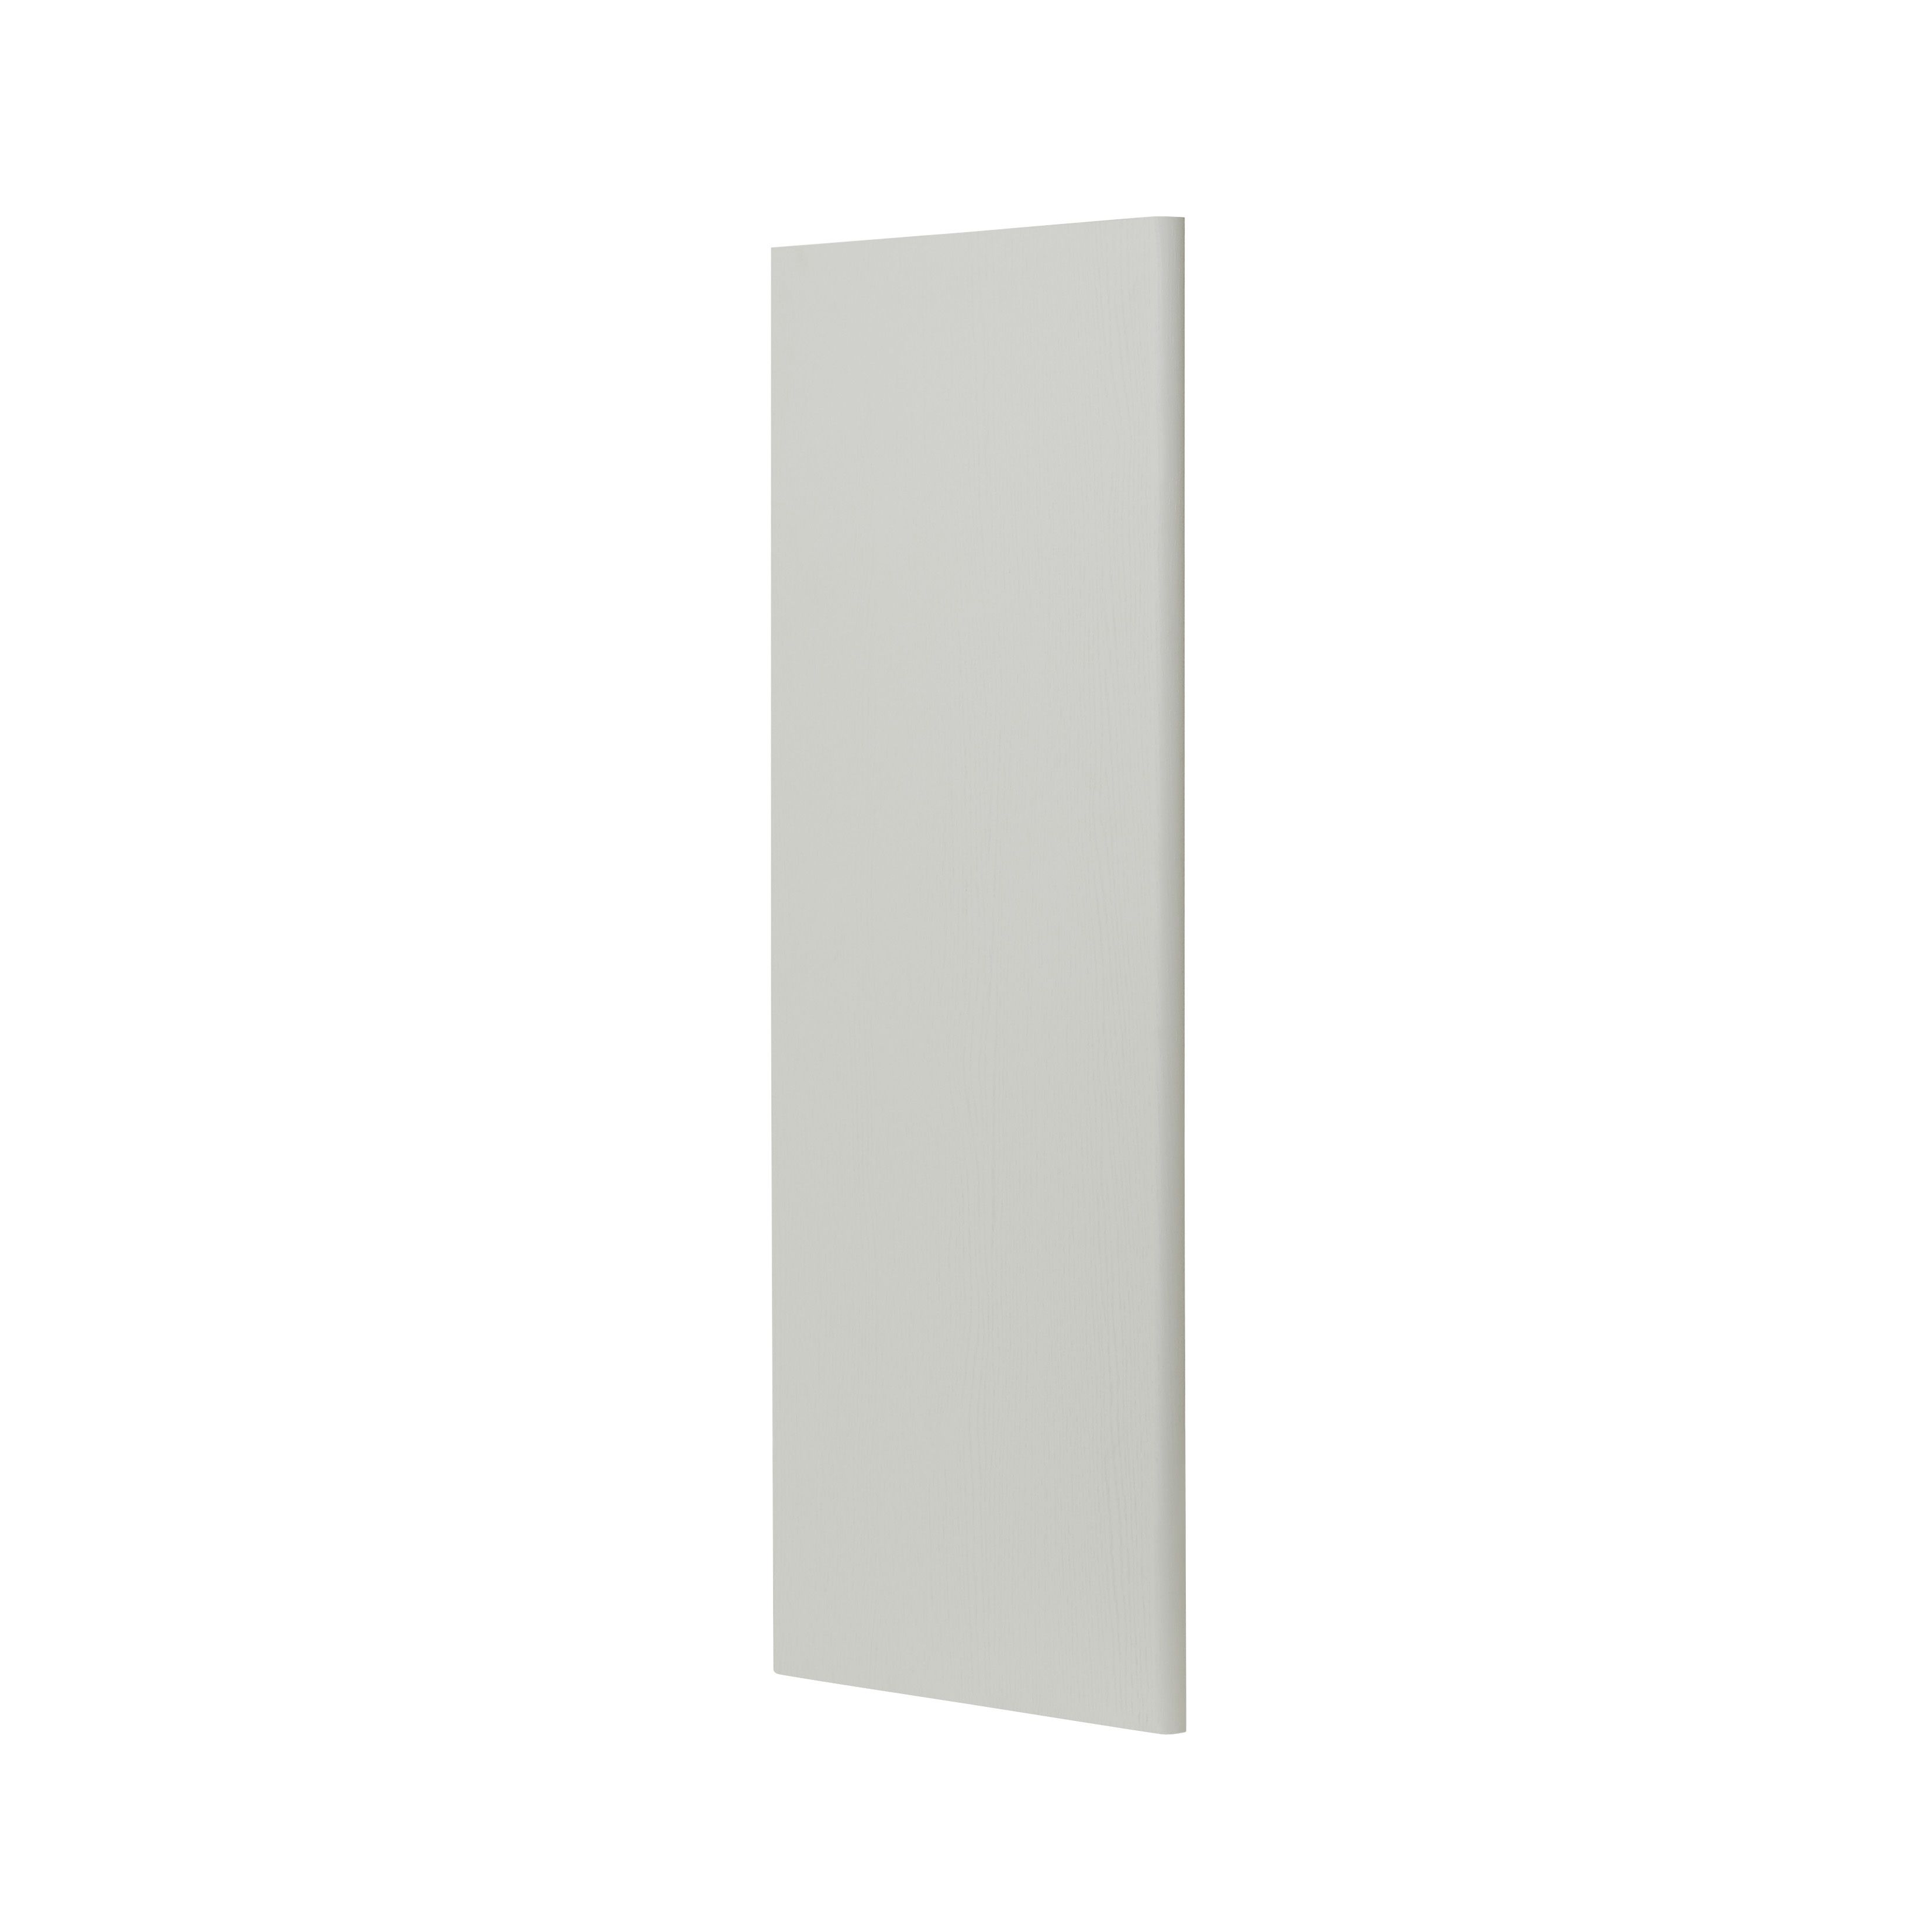 GoodHome Alpinia Matt grey painted wood effect shaker Standard Wall Clad on end panel (H)960mm (W)360mm